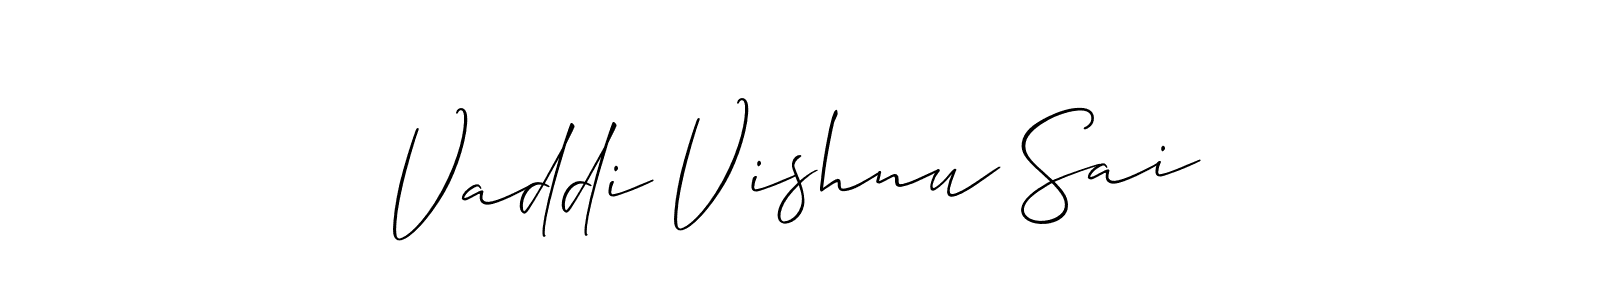 How to make Vaddi Vishnu Sai signature? Allison_Script is a professional autograph style. Create handwritten signature for Vaddi Vishnu Sai name. Vaddi Vishnu Sai signature style 2 images and pictures png